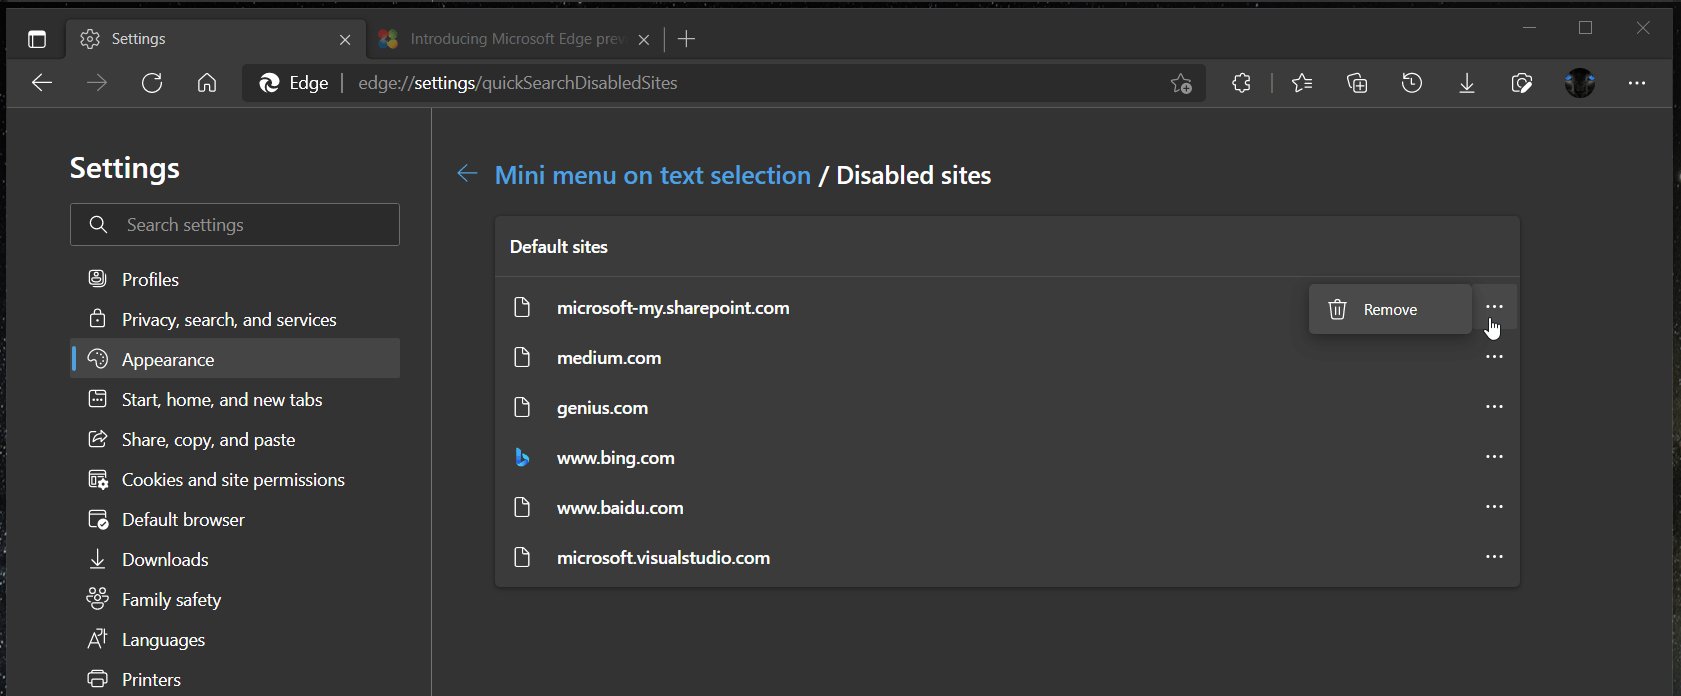 Disable Mini Menus For Specific Websites In Microsoft Edge